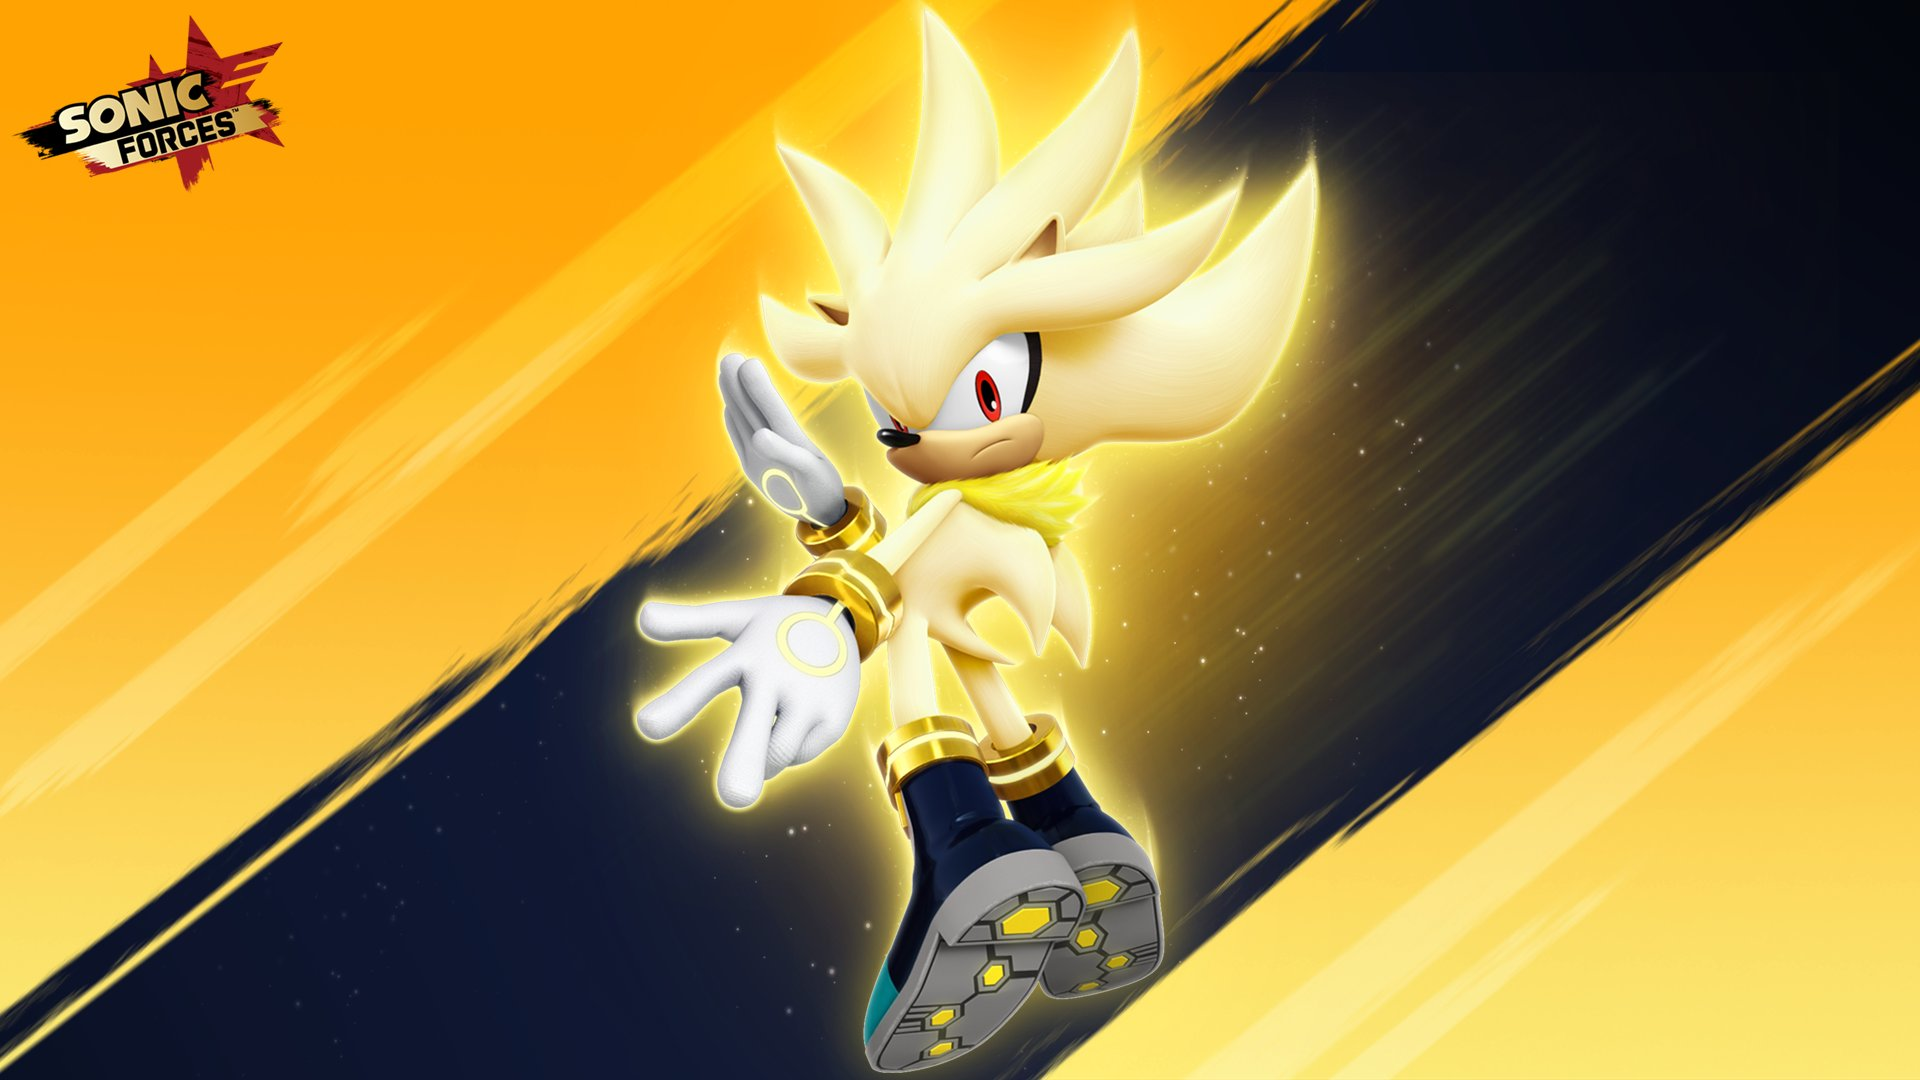 Sonic Prime Dash